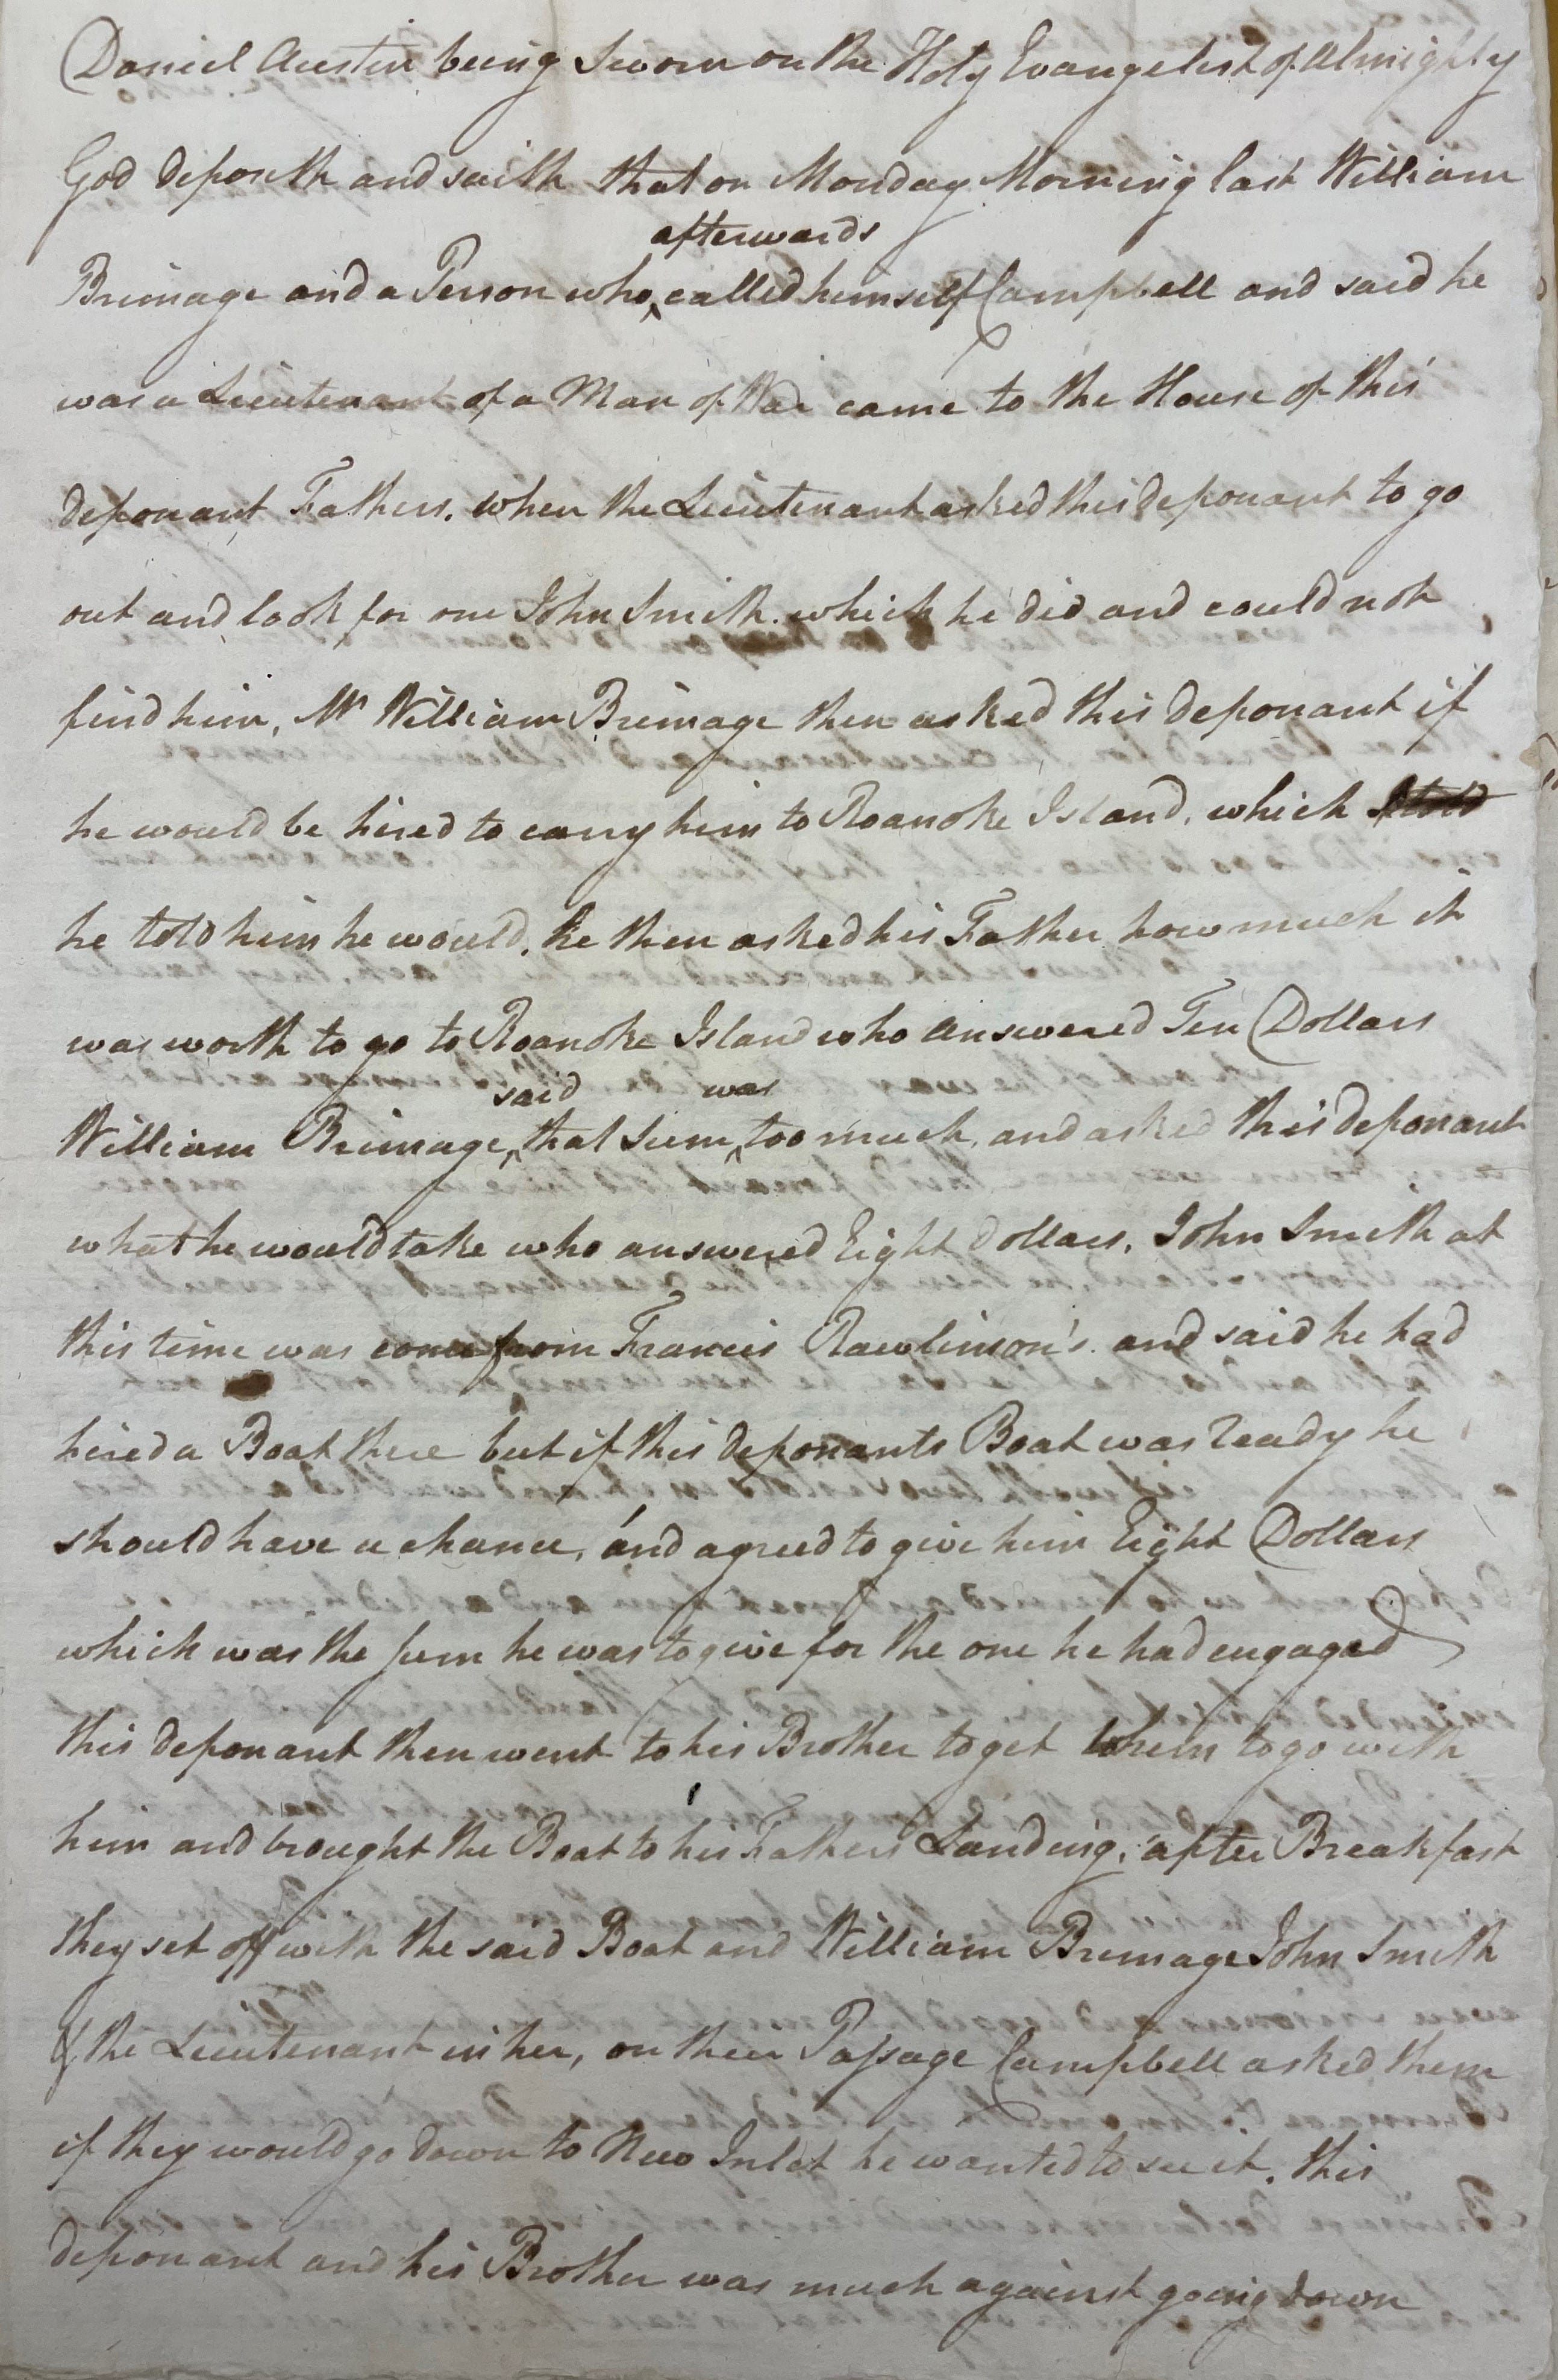 Deposition of Daniel Austin, 30 July 1777, page 1